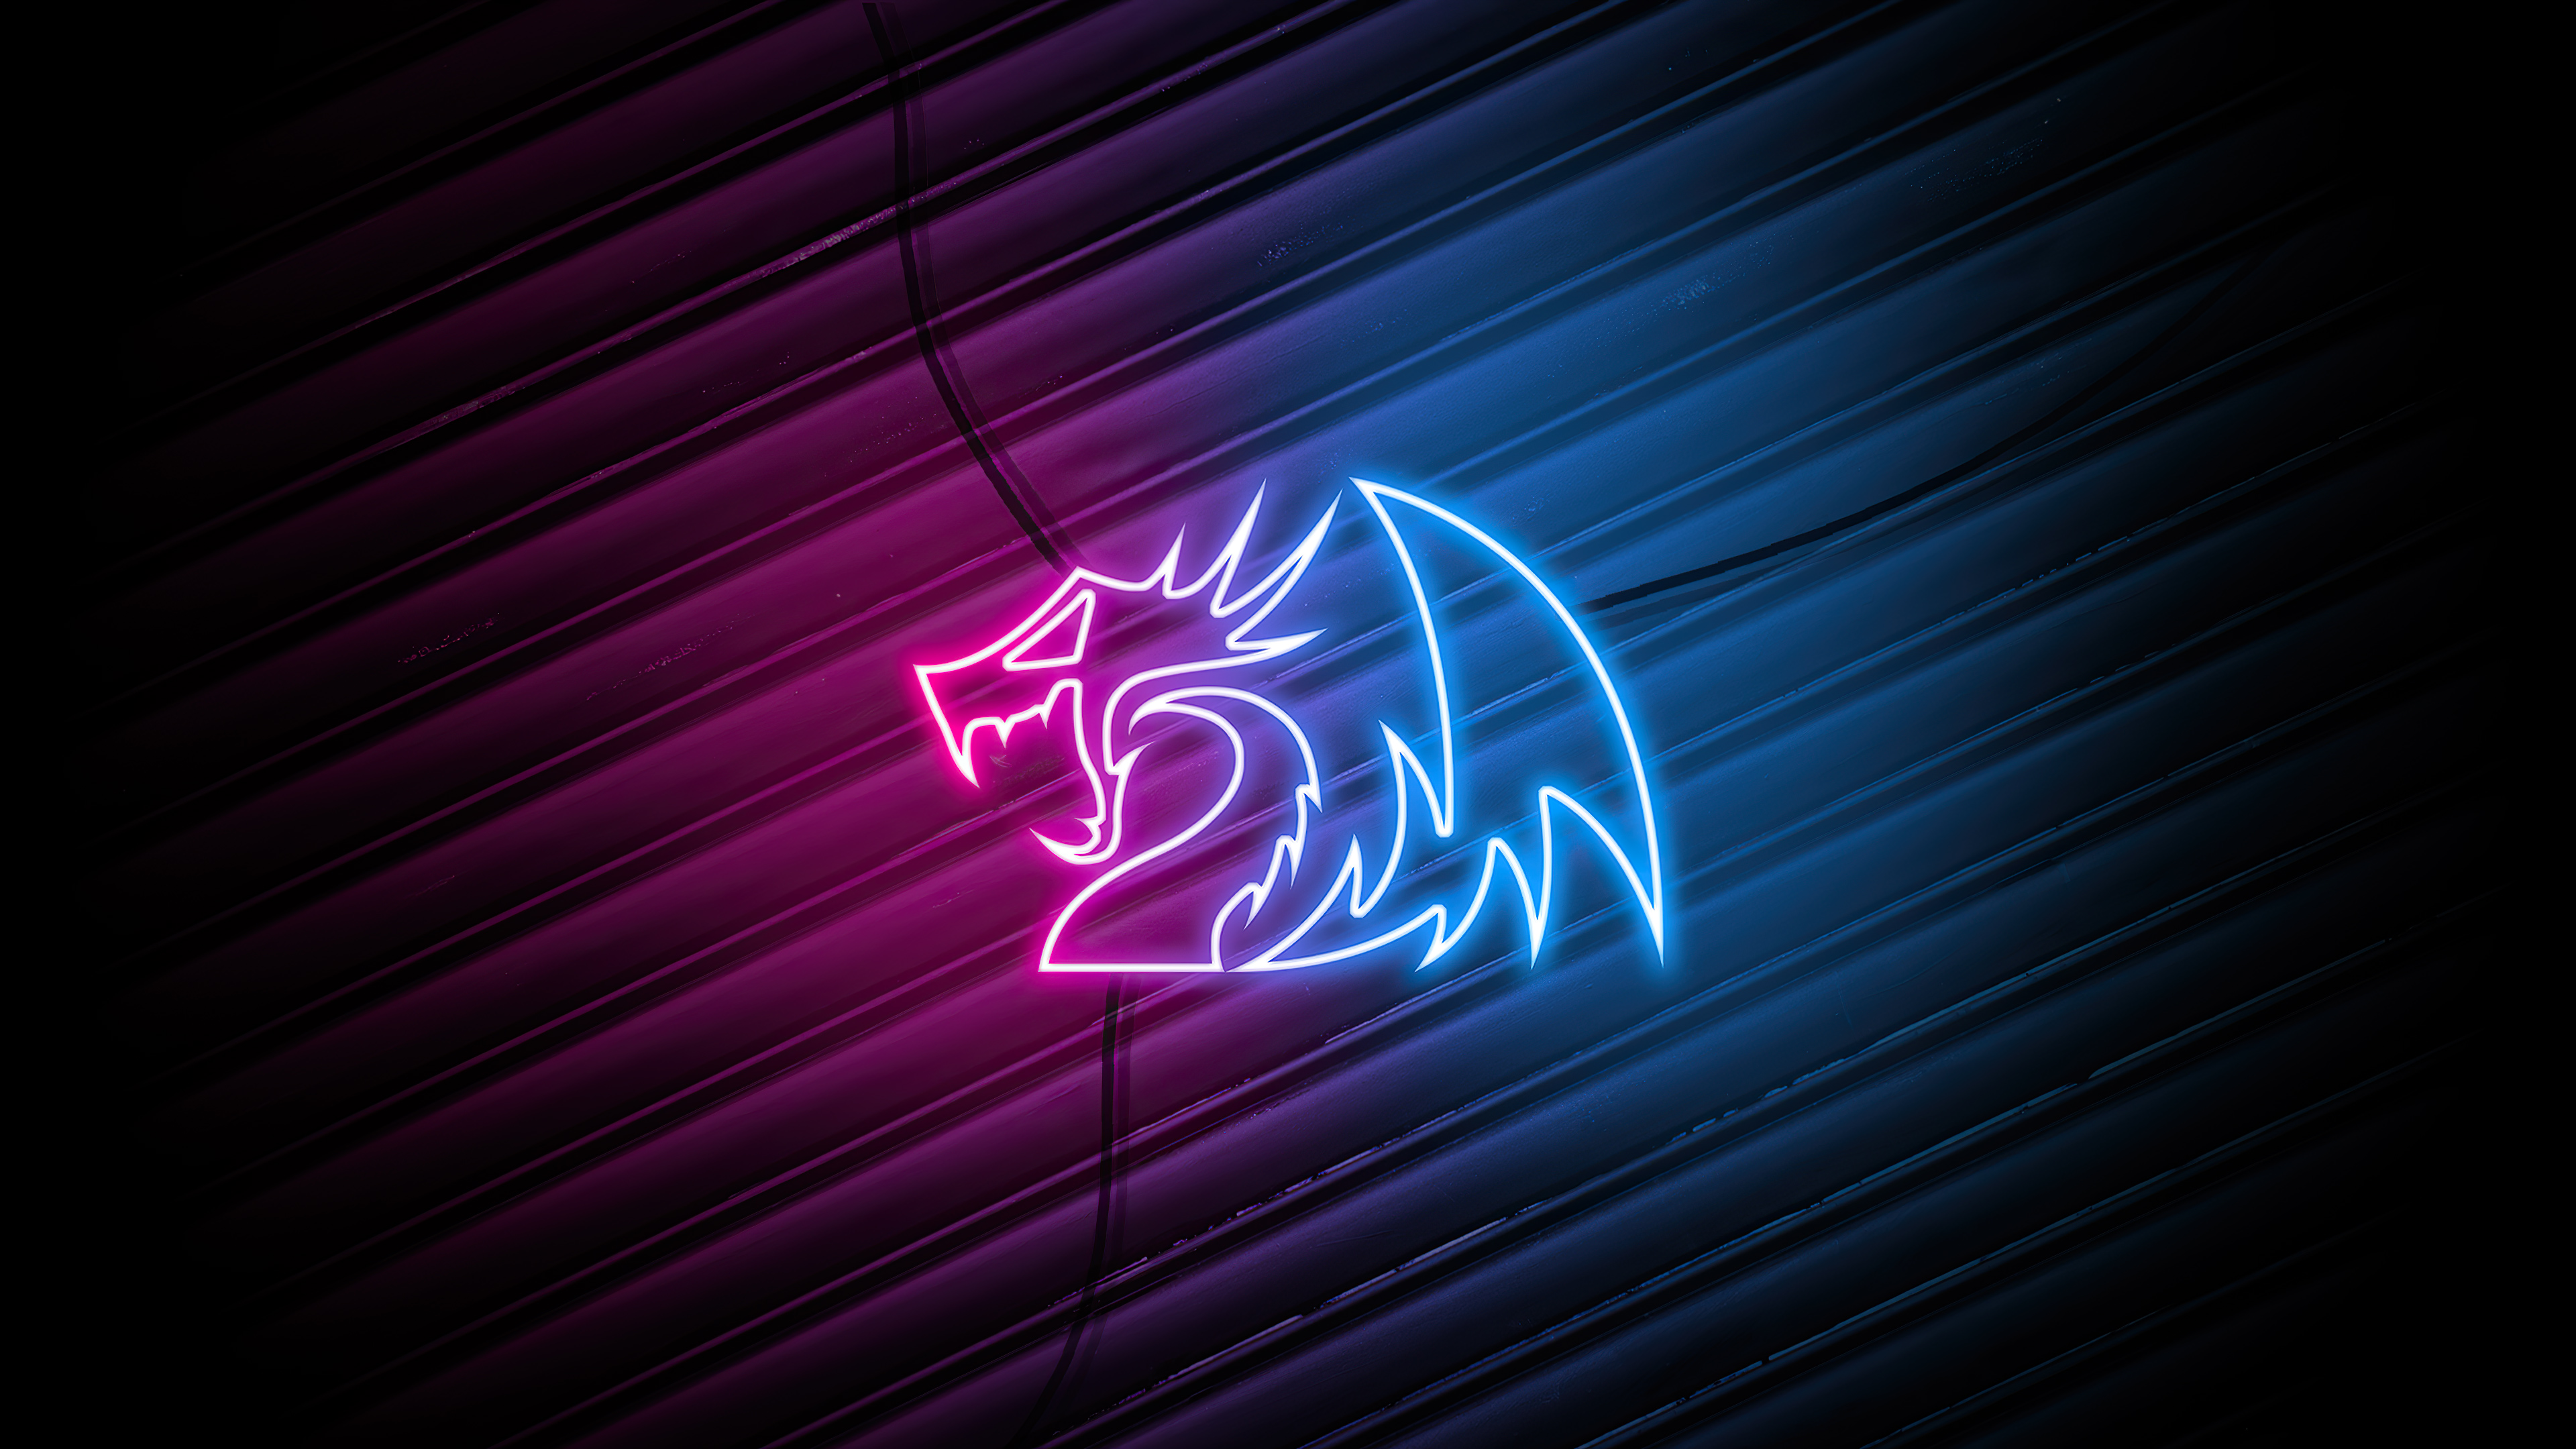 Tải xuống APK Neon Dragon wallpaper 4K cho Android